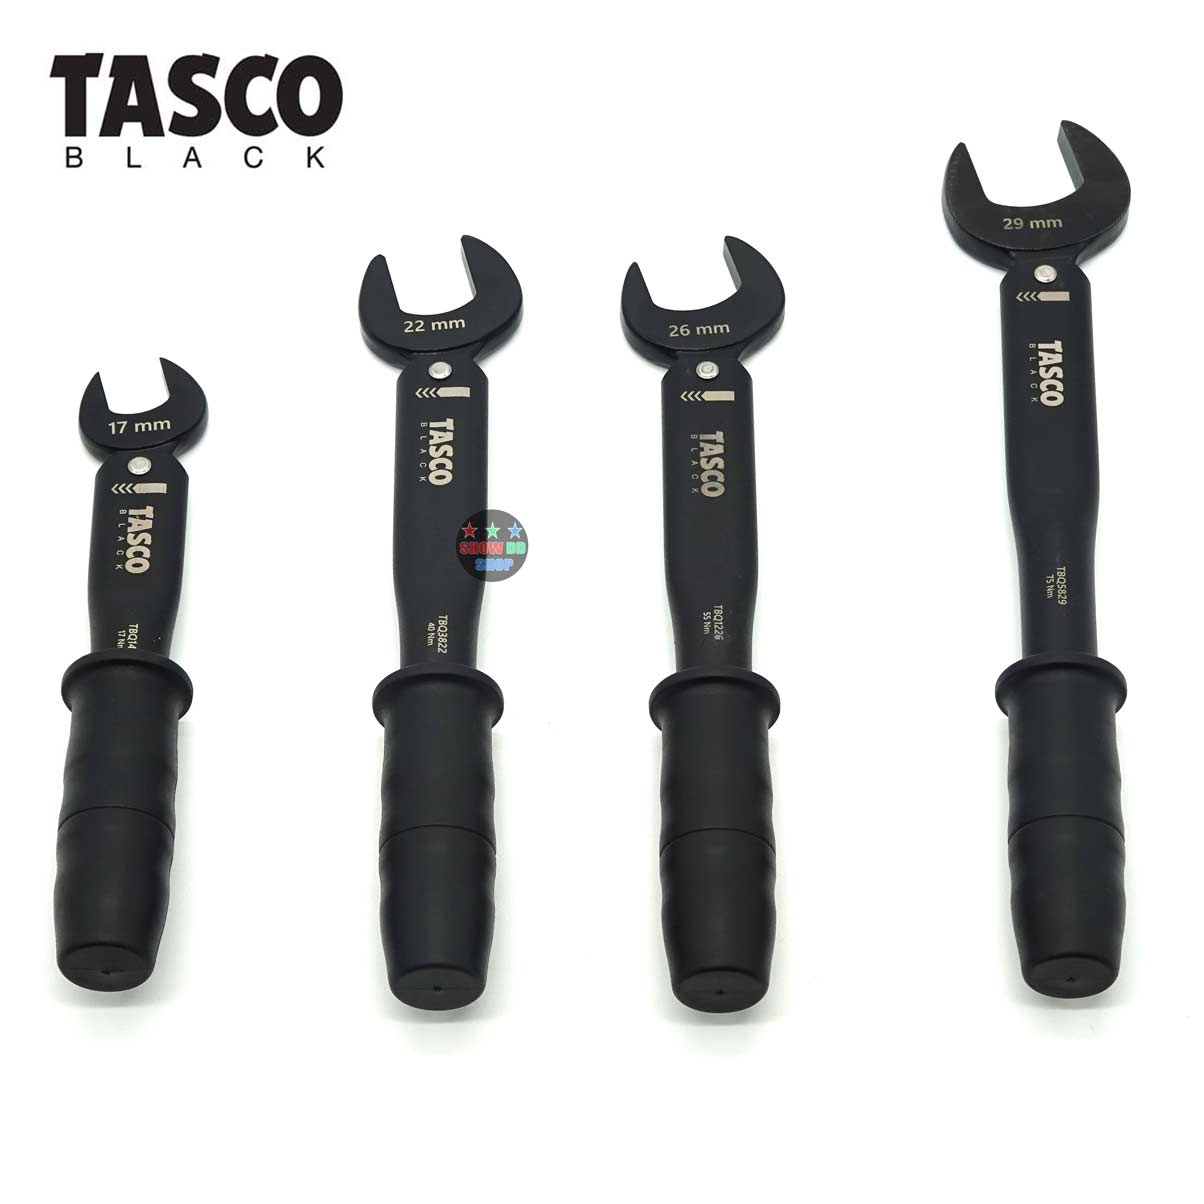 TBQ900-SET : torque wrench (1/2″, 3/8″, 1/4″, 5/8″) – Tasco Black